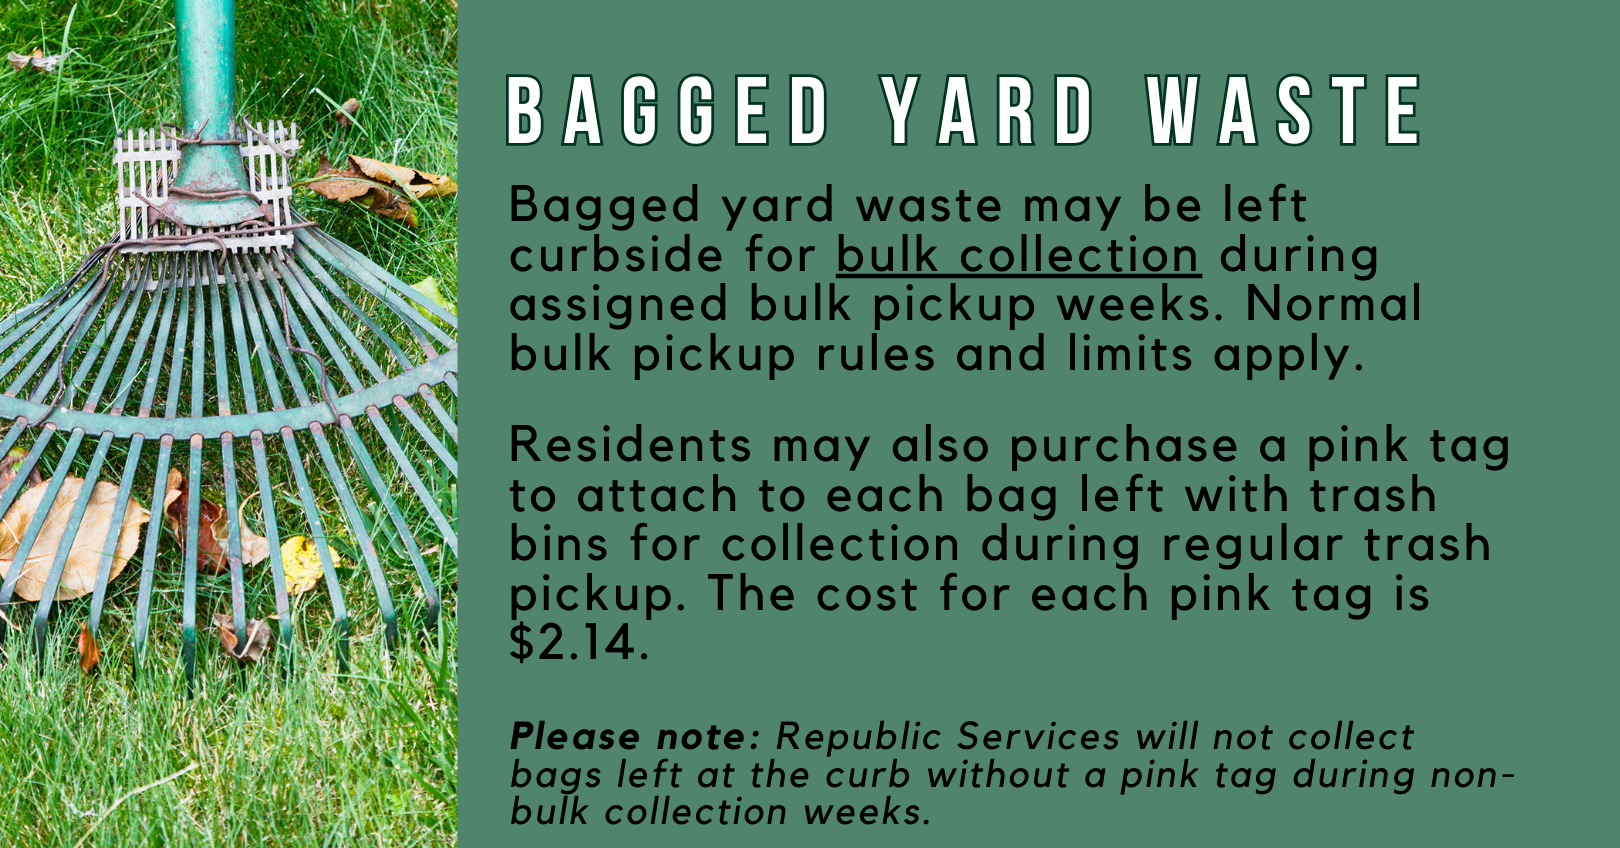 Bagged yard waste